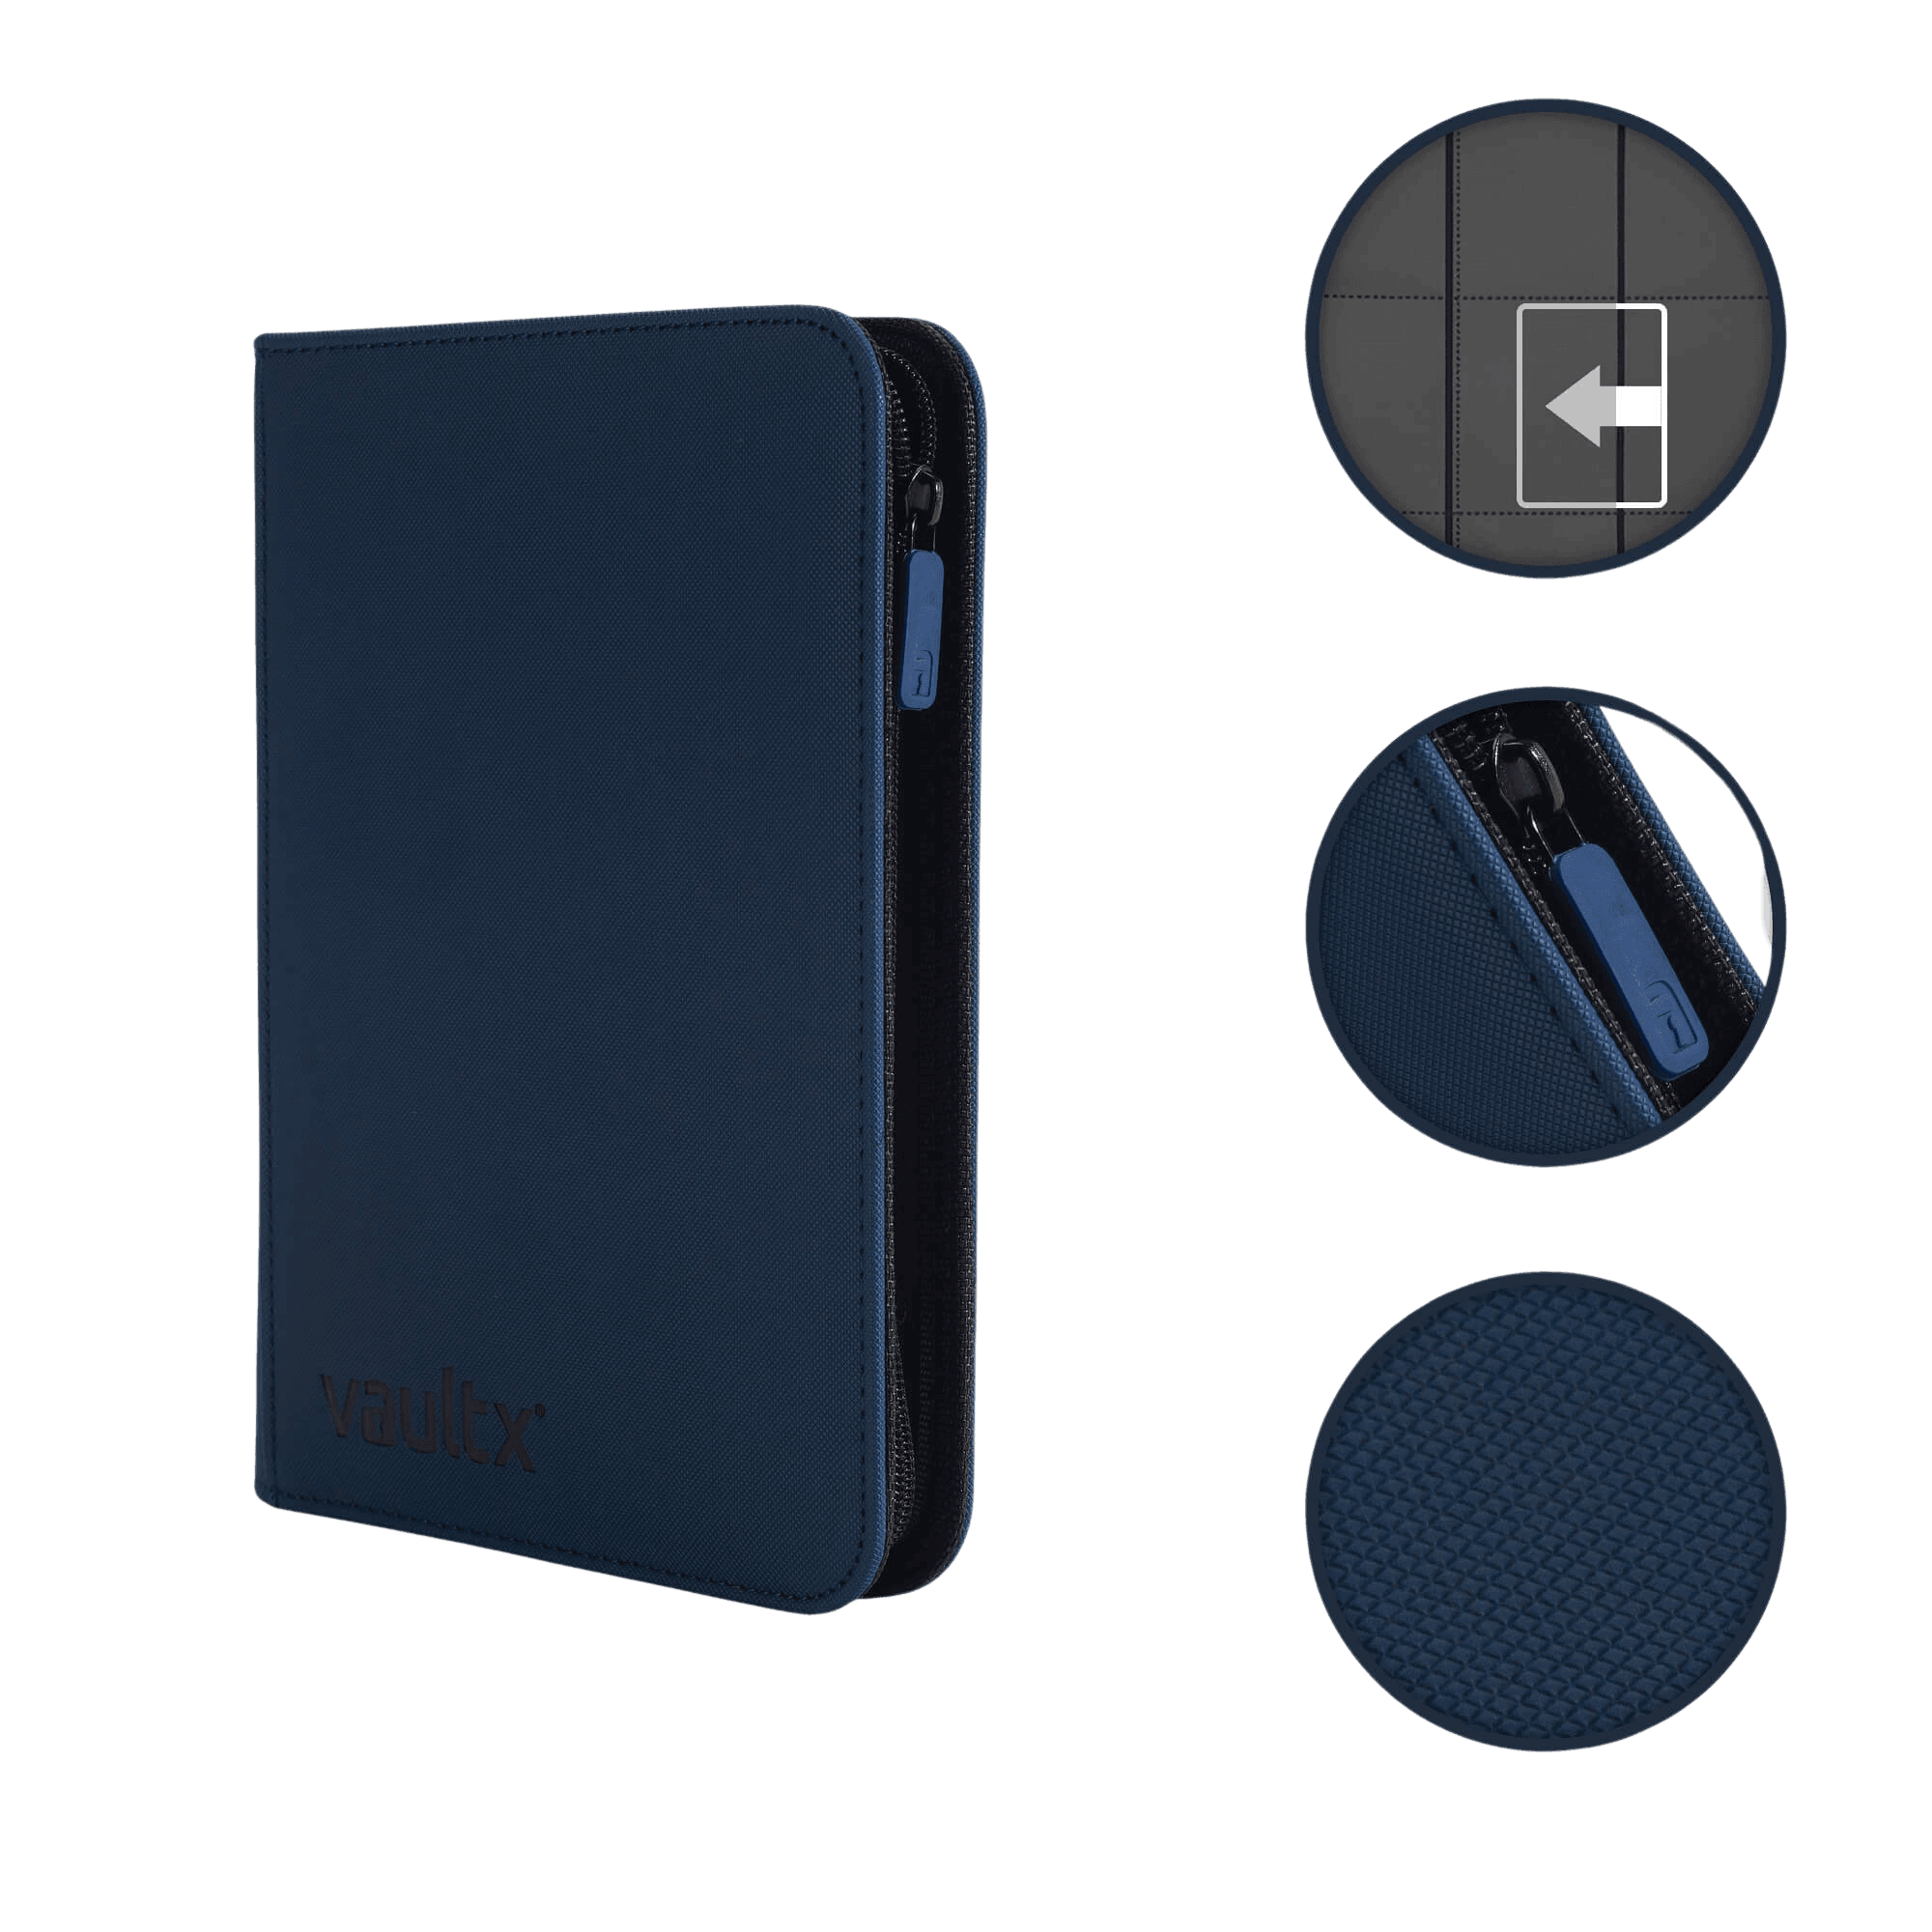 Vault X 4-Pocket Exo-Tec® Zip Binder - Blue - The Card Vault